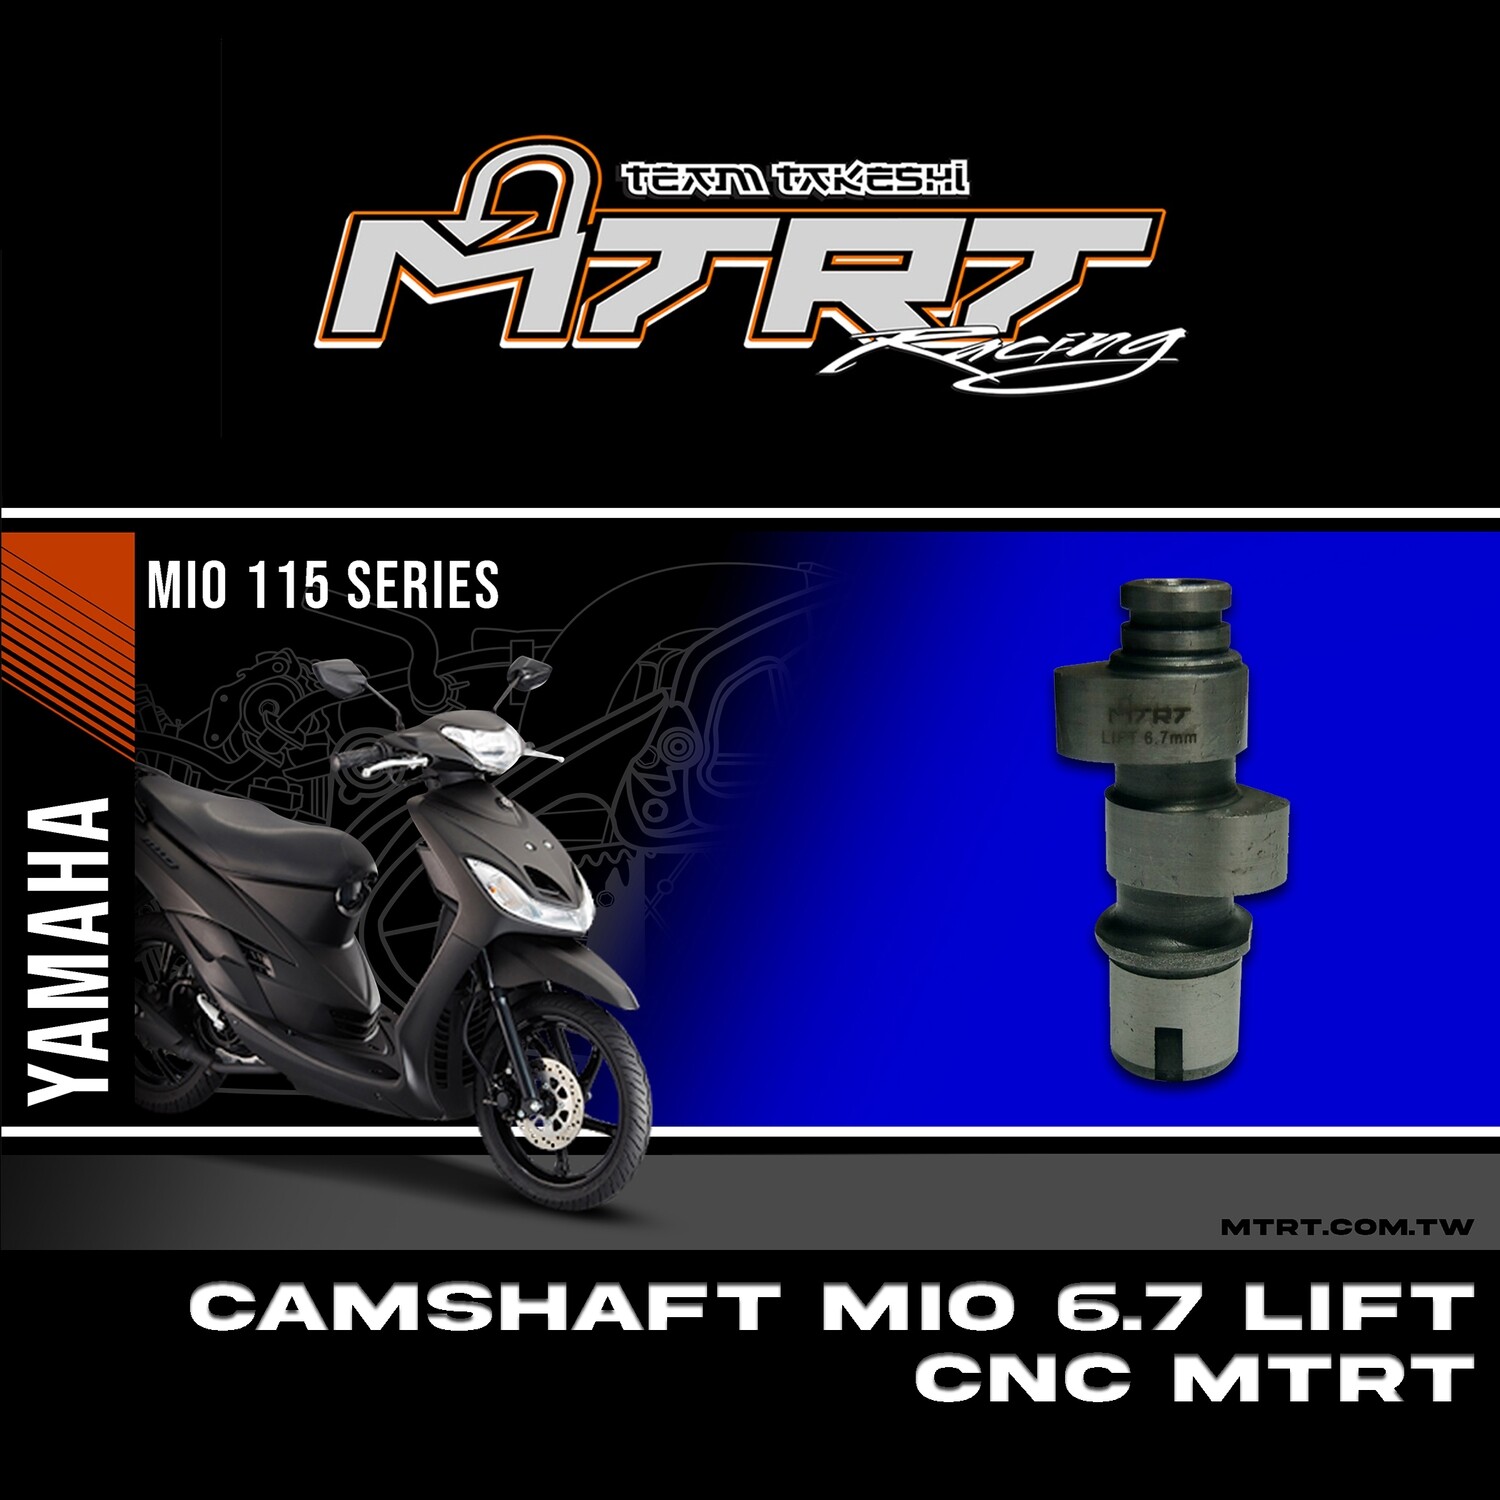 CAMSHAFT MIO 6.7 LIFT CNC MTRT